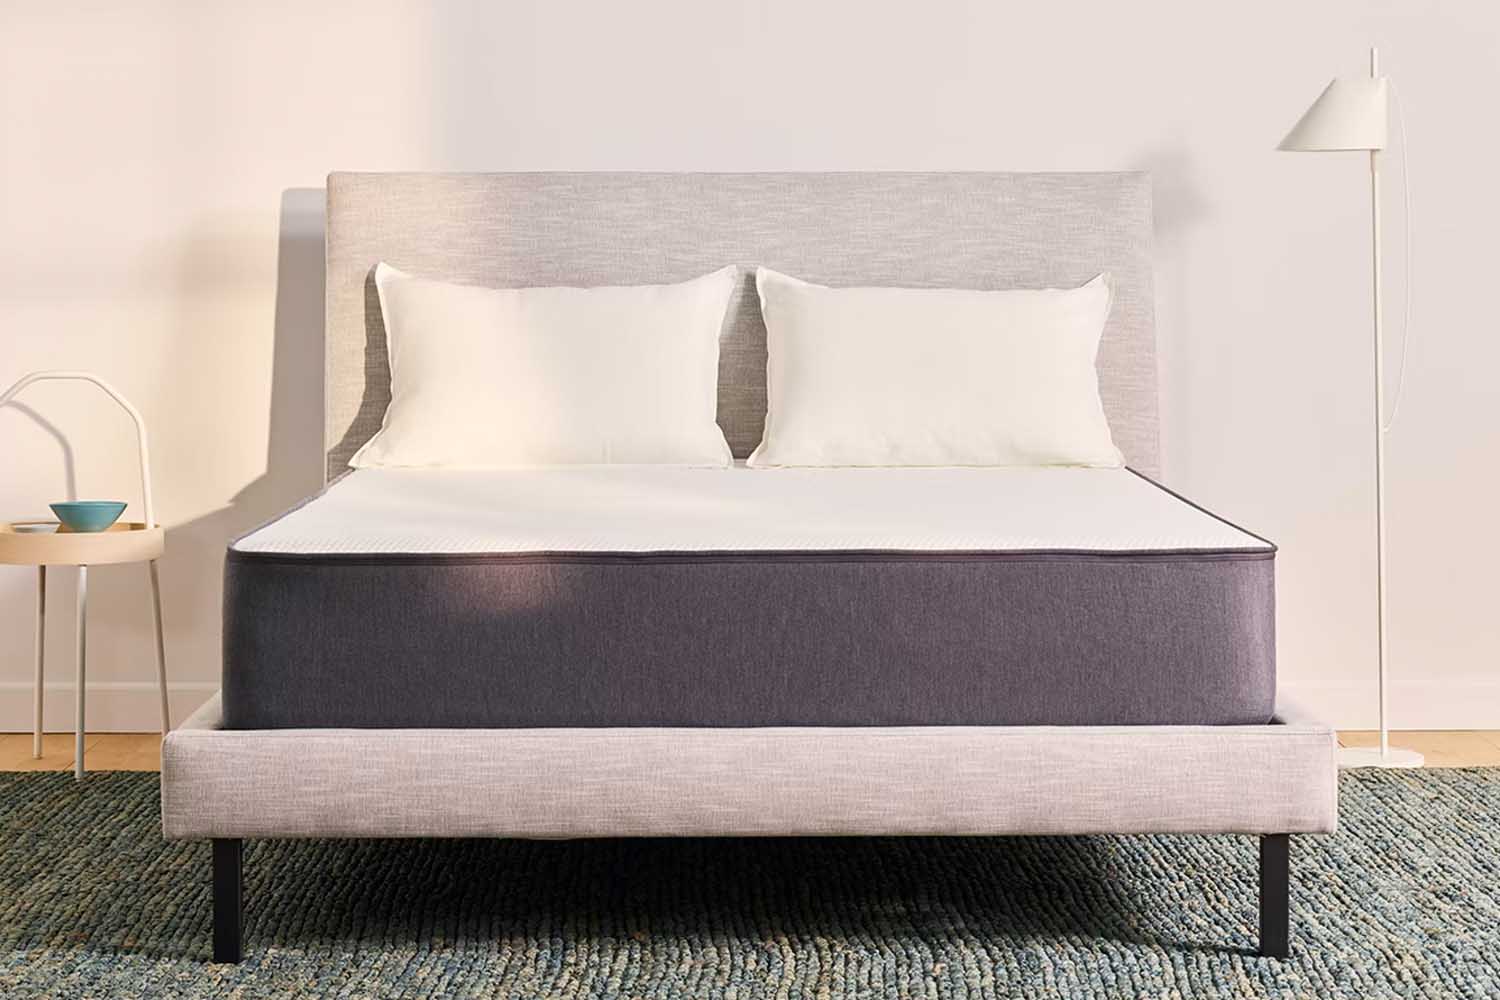 casper mattresses negetive review